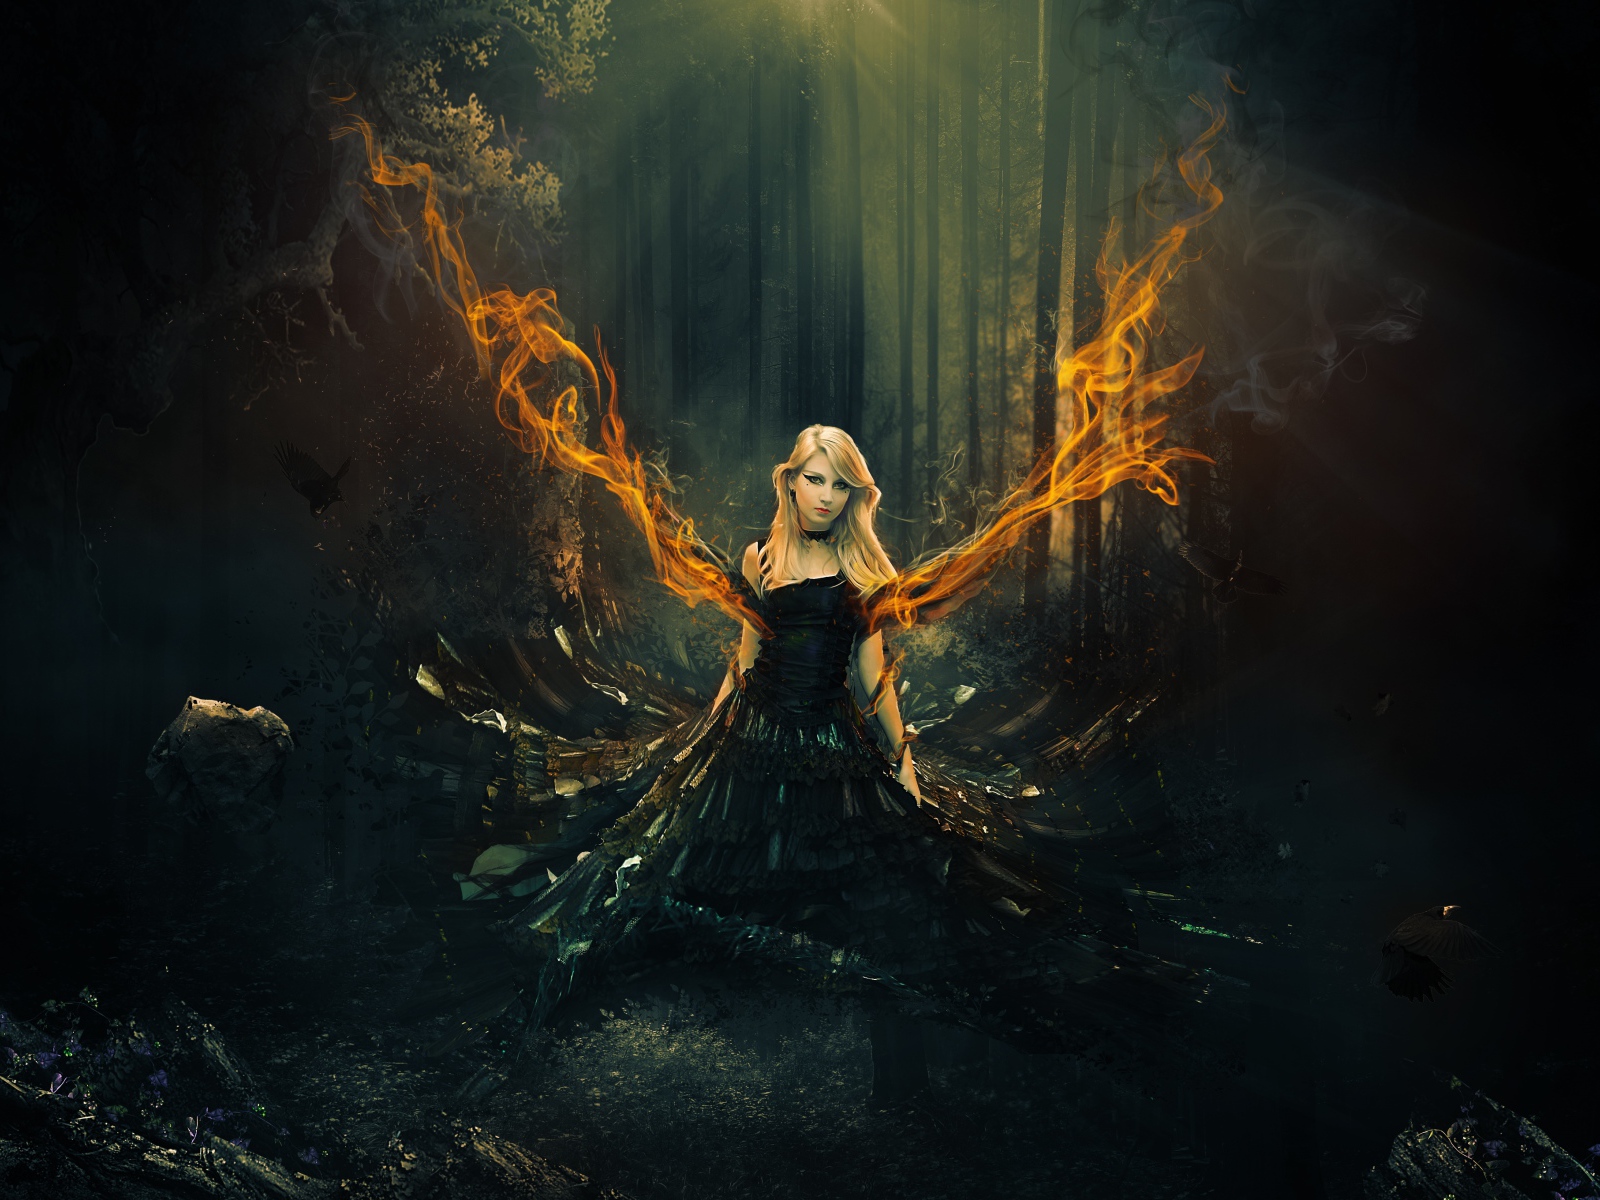 Fantastic girl in a black dress with fiery wings